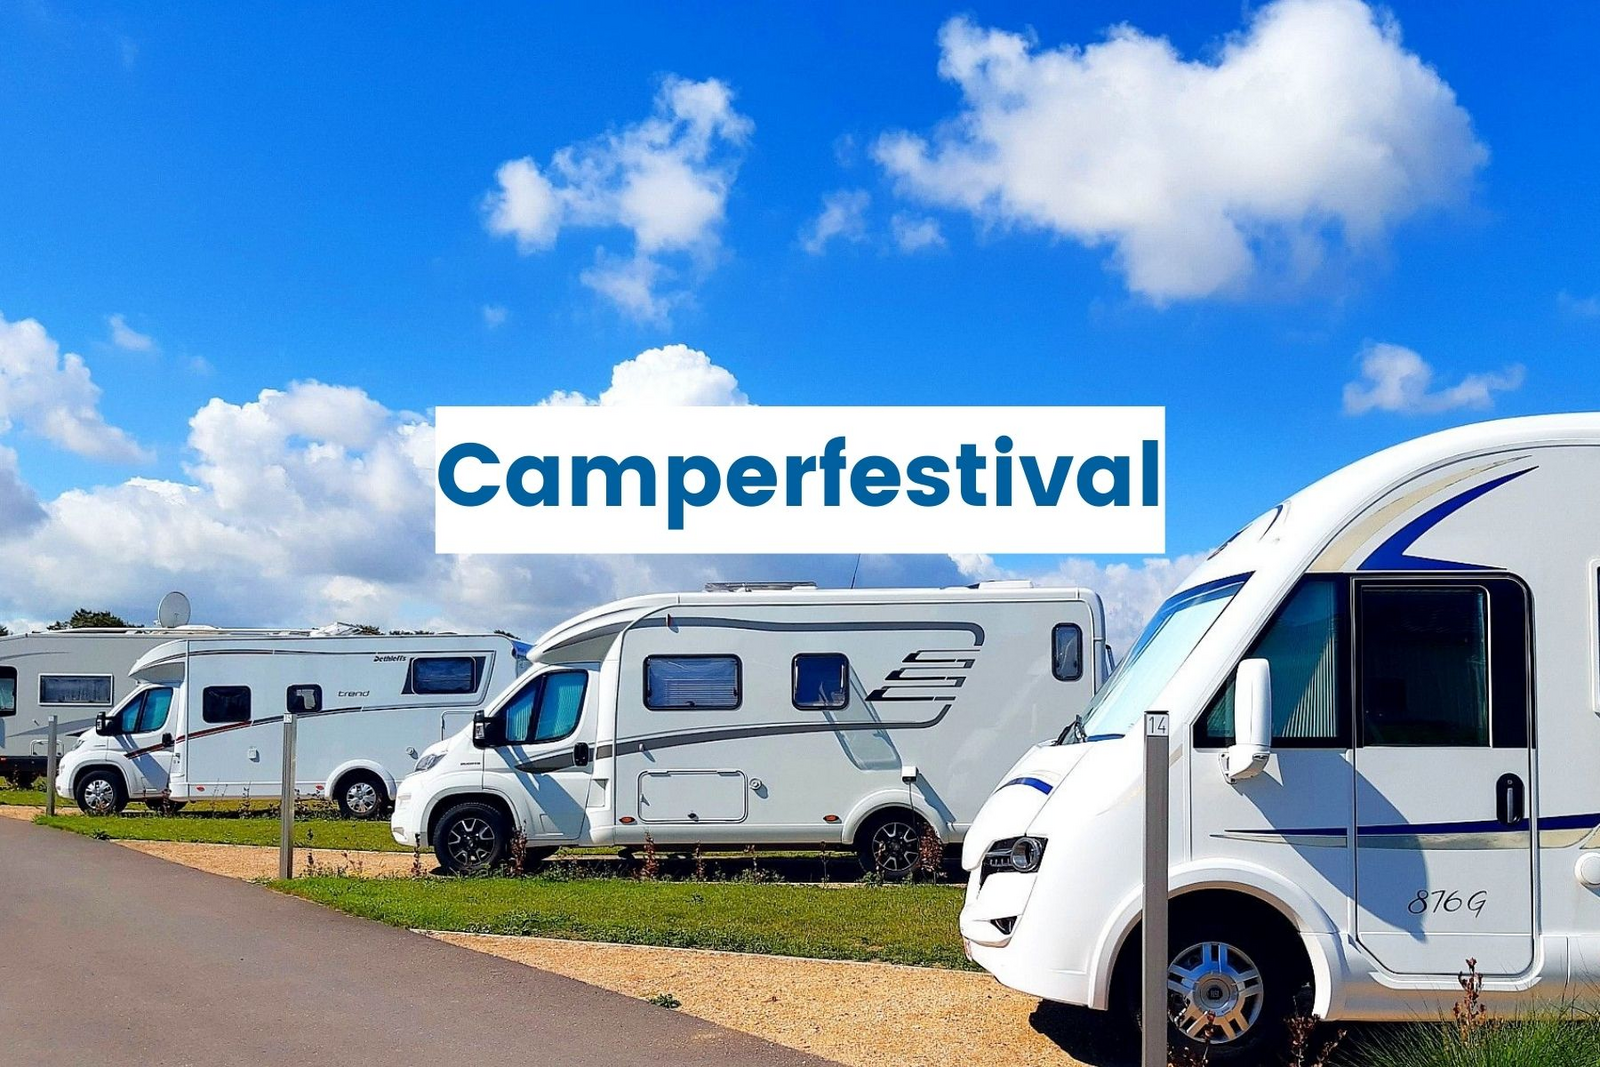 Camperfestival